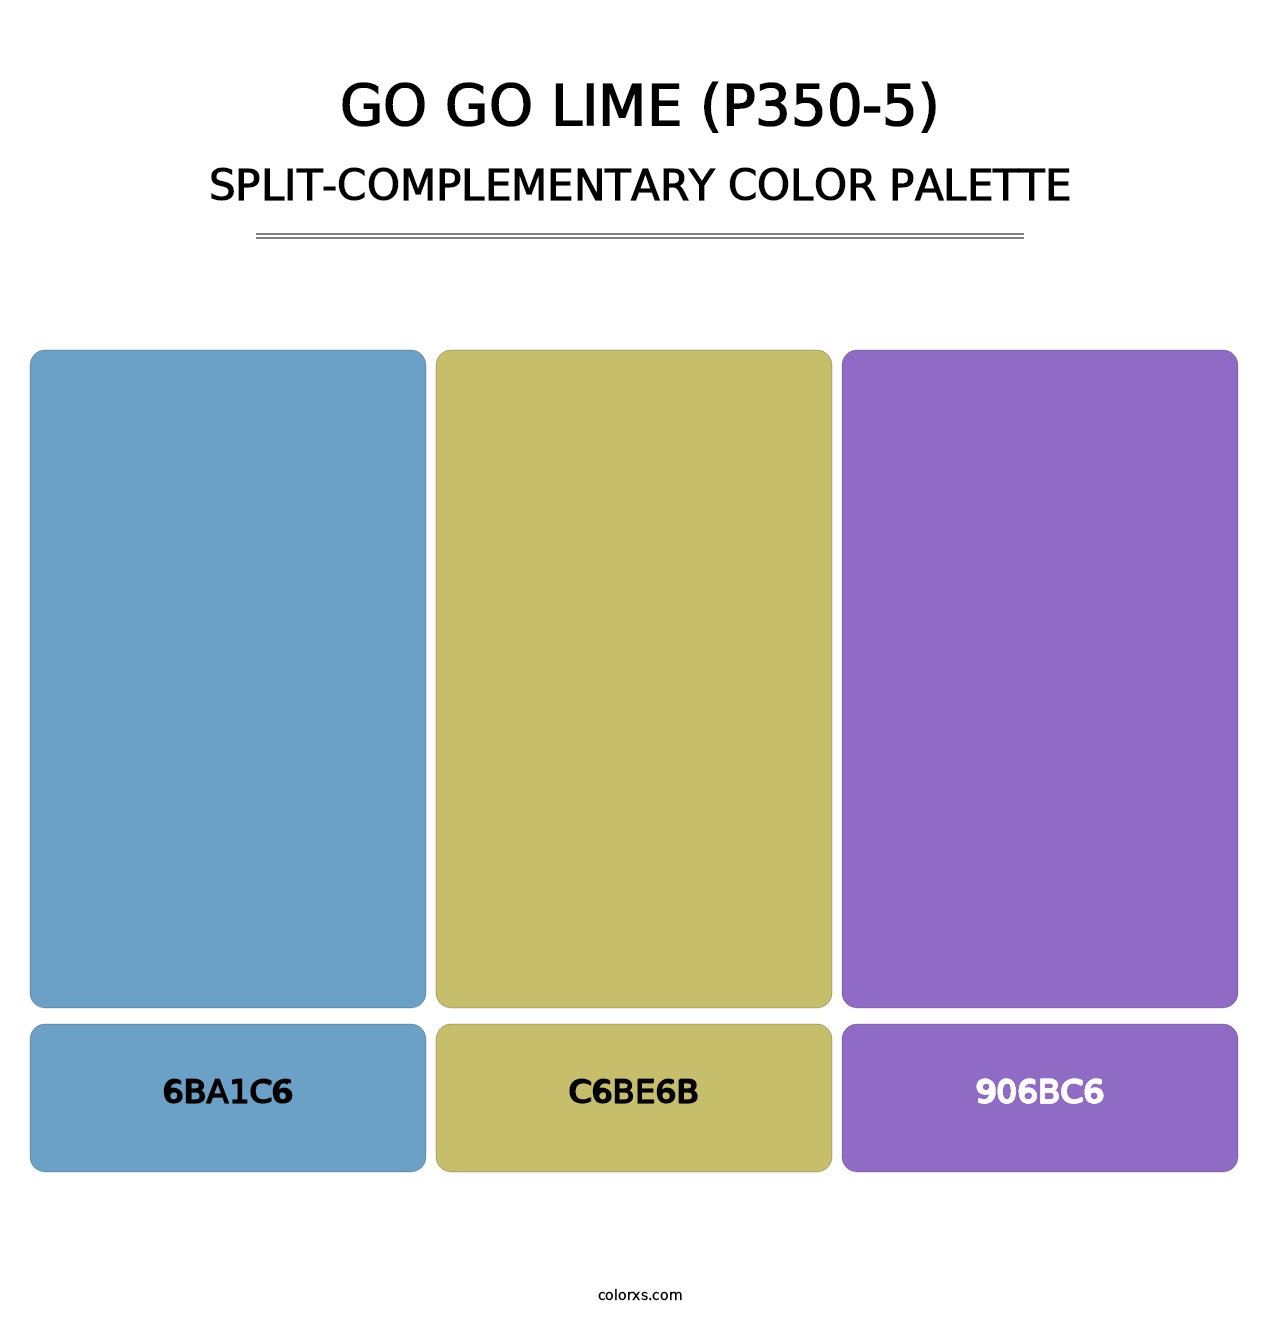 Go Go Lime (P350-5) - Split-Complementary Color Palette